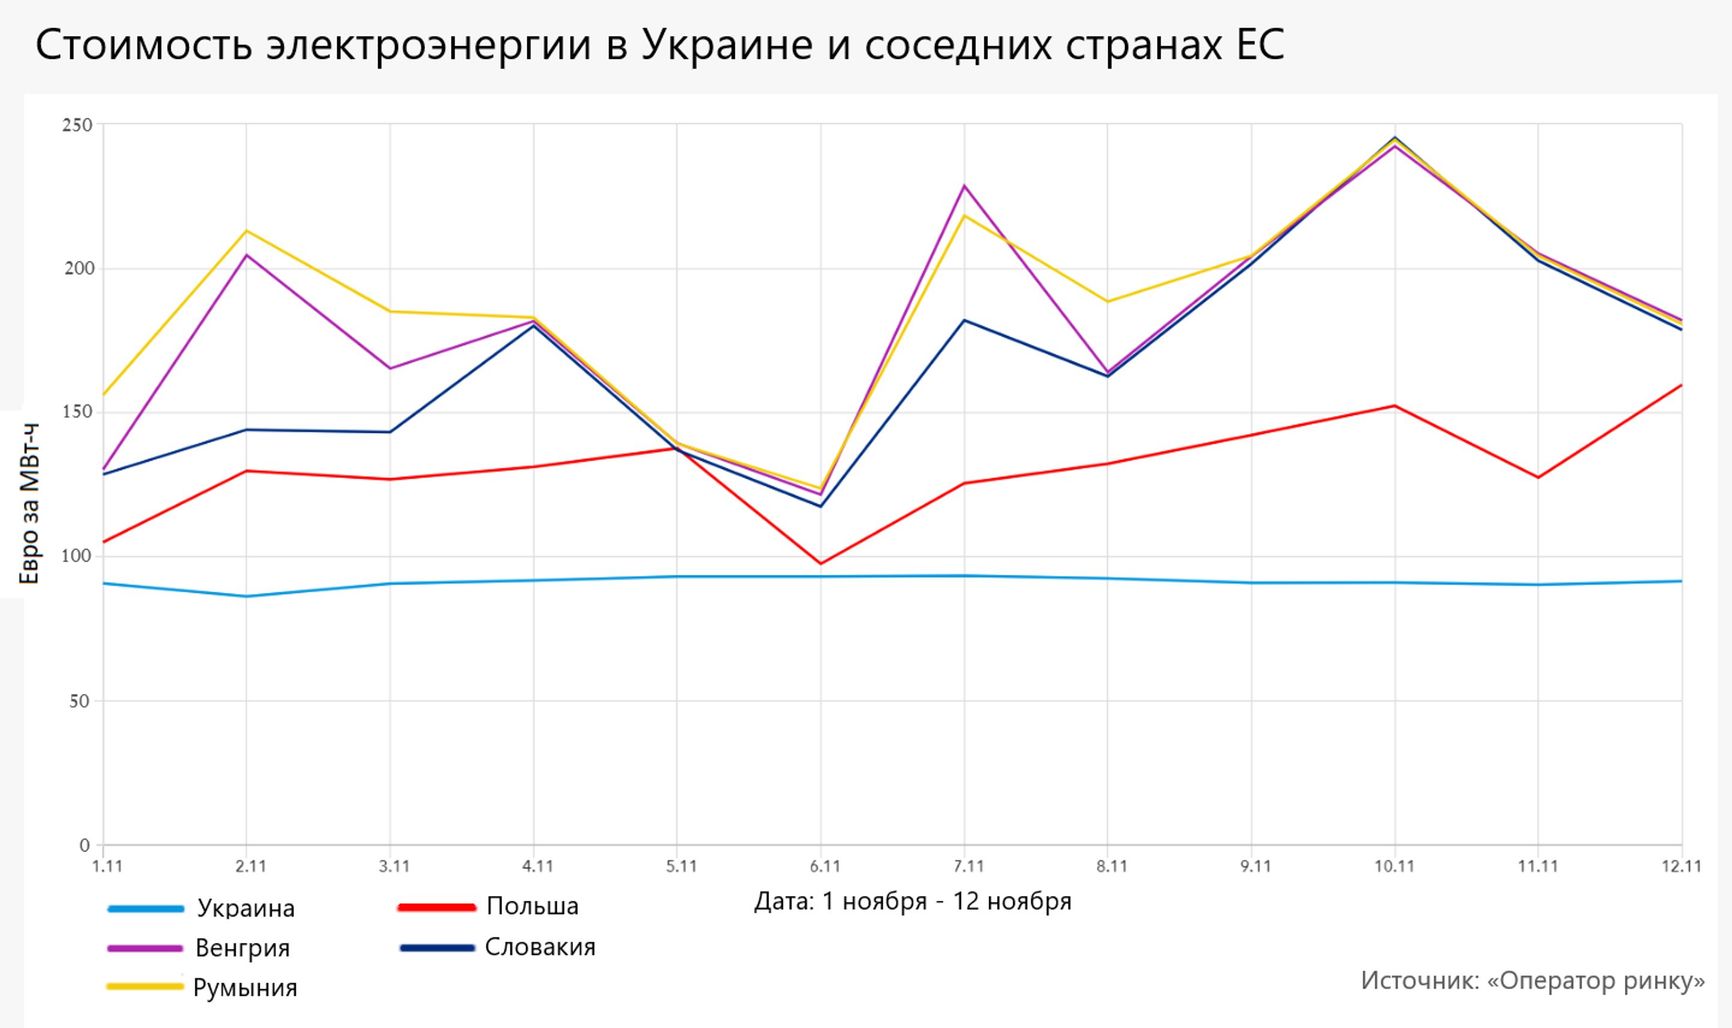 Electricity prices in Ukraine and neighboring EU countries: Romania (yellow), Hungary (purple), Slovakia (navy), Poland (red), Ukraine (blue) 